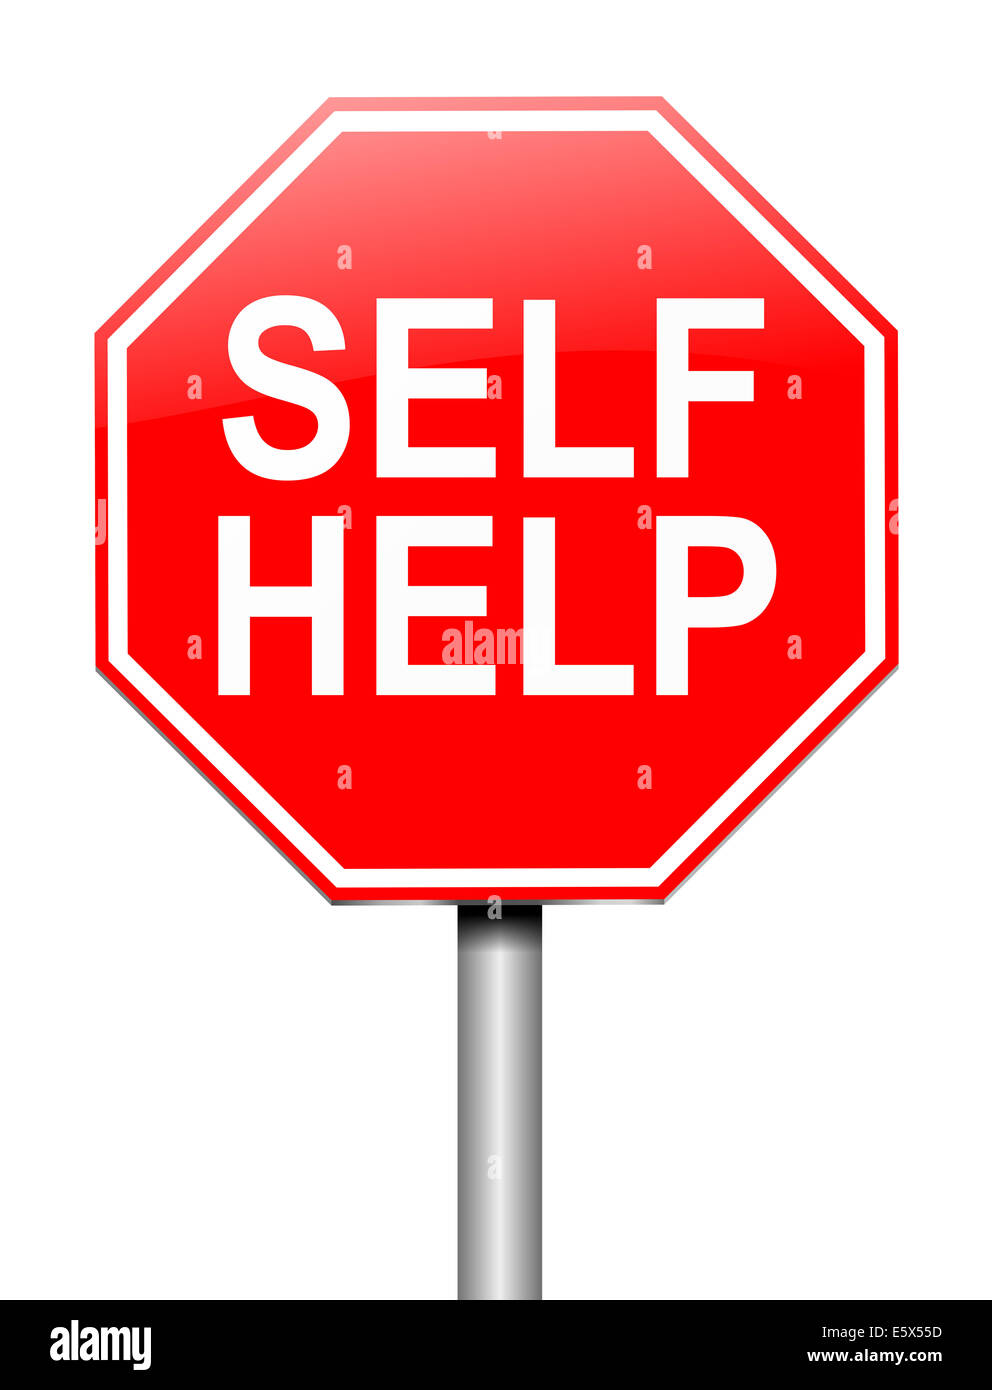 Self help concept. Stock Photo